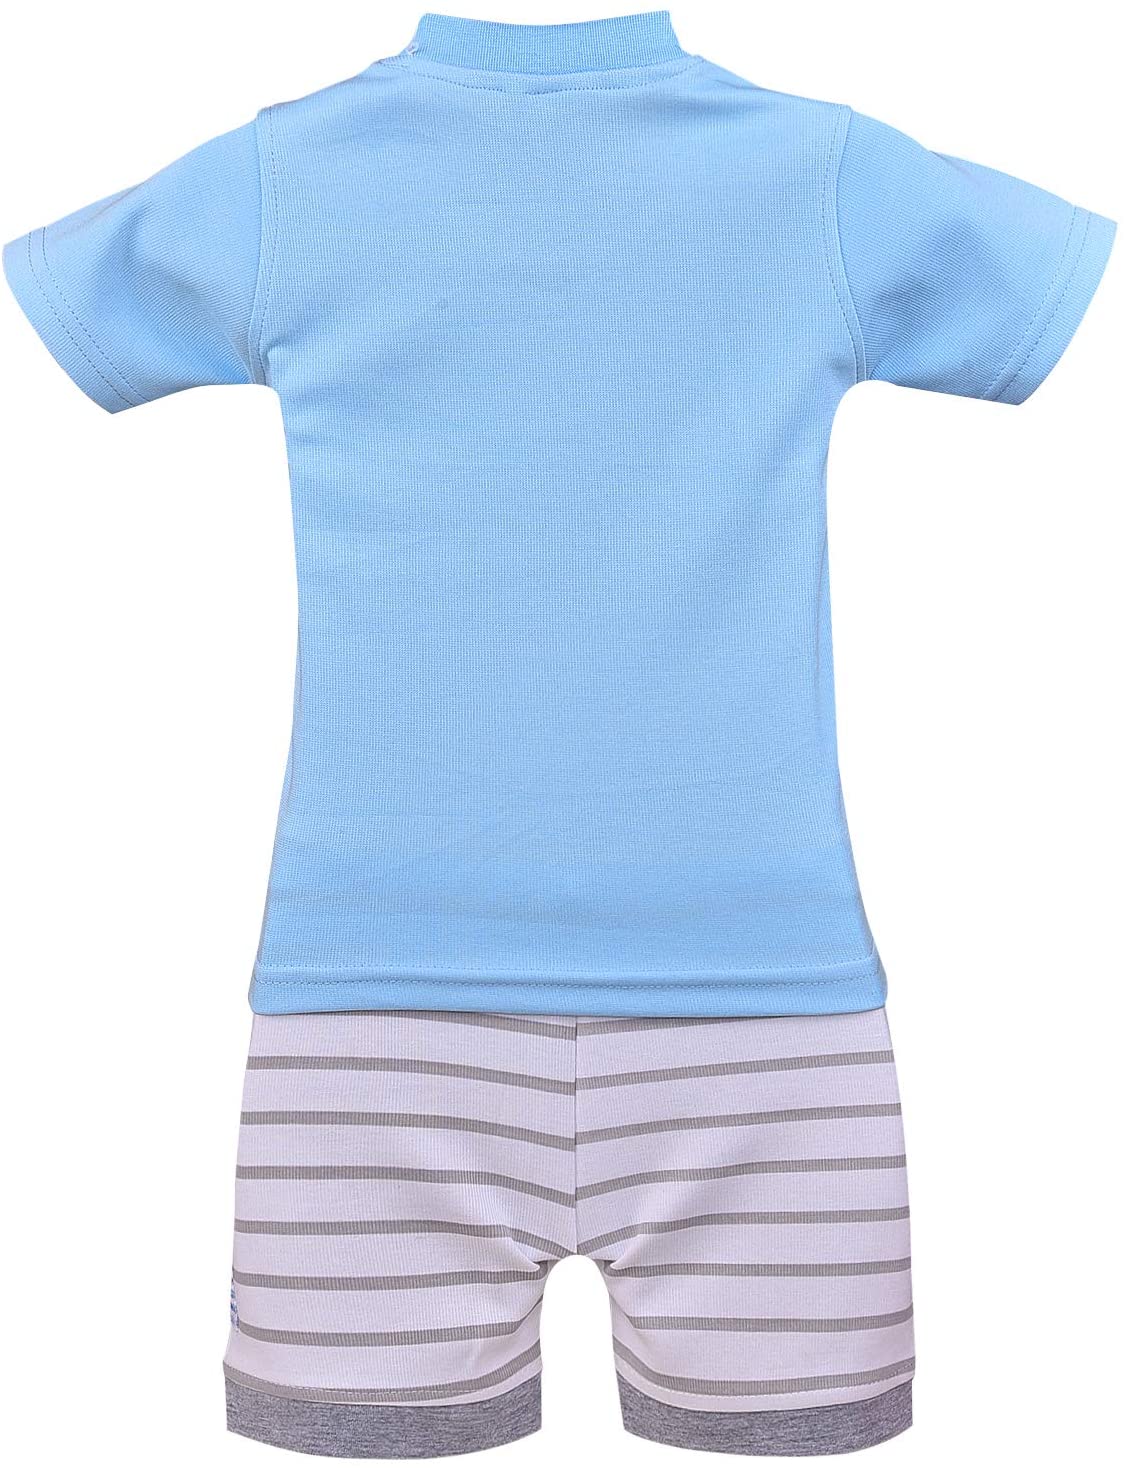 Wish Karo Unisex Clothing Sets for Boys & Baby Girls-(bt21blu)